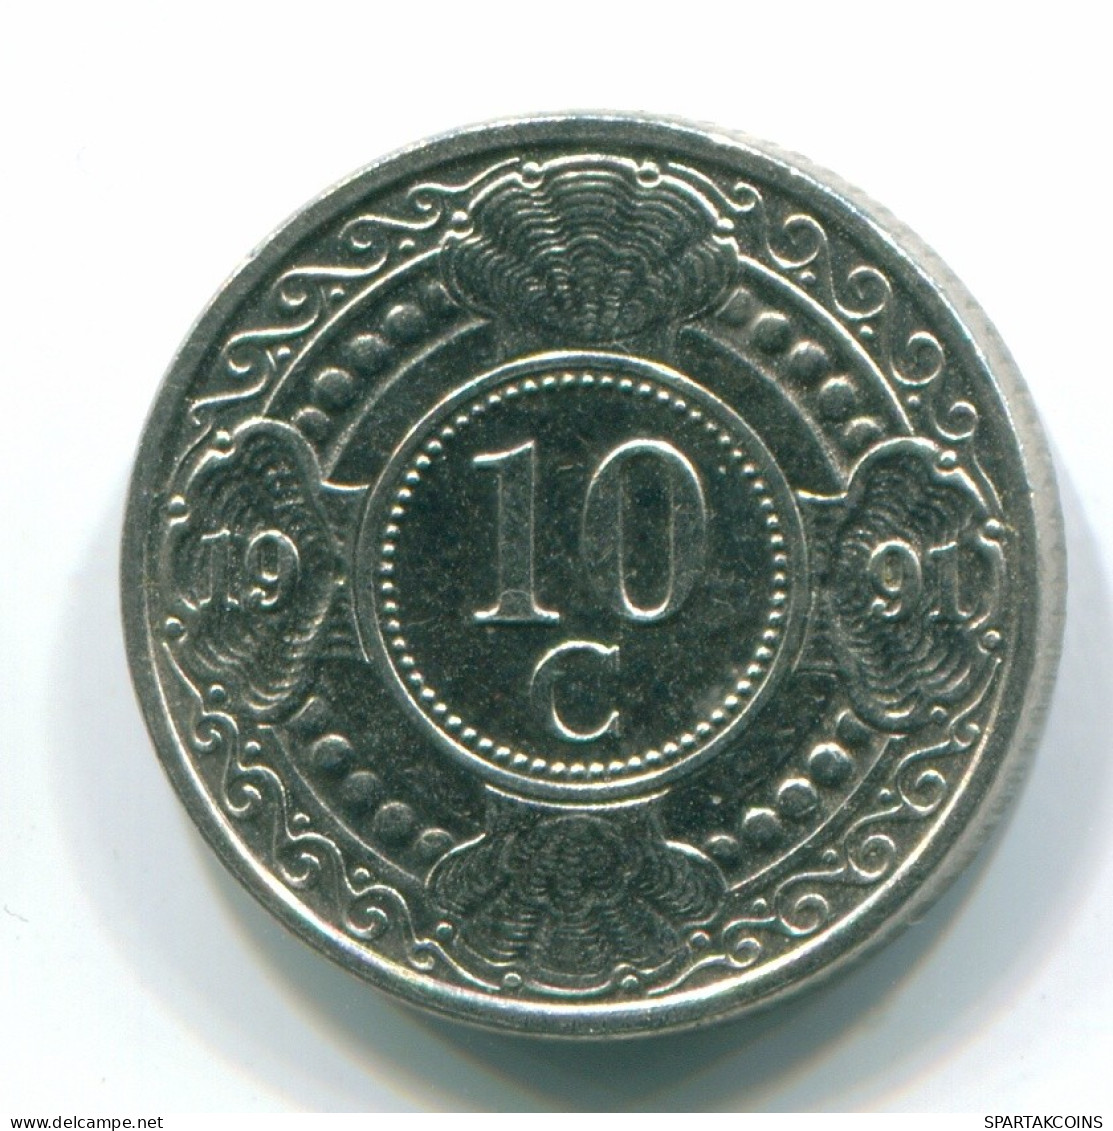 10 CENTS 1991 NIEDERLÄNDISCHE ANTILLEN Nickel Koloniale Münze #S11321.D.A - Netherlands Antilles